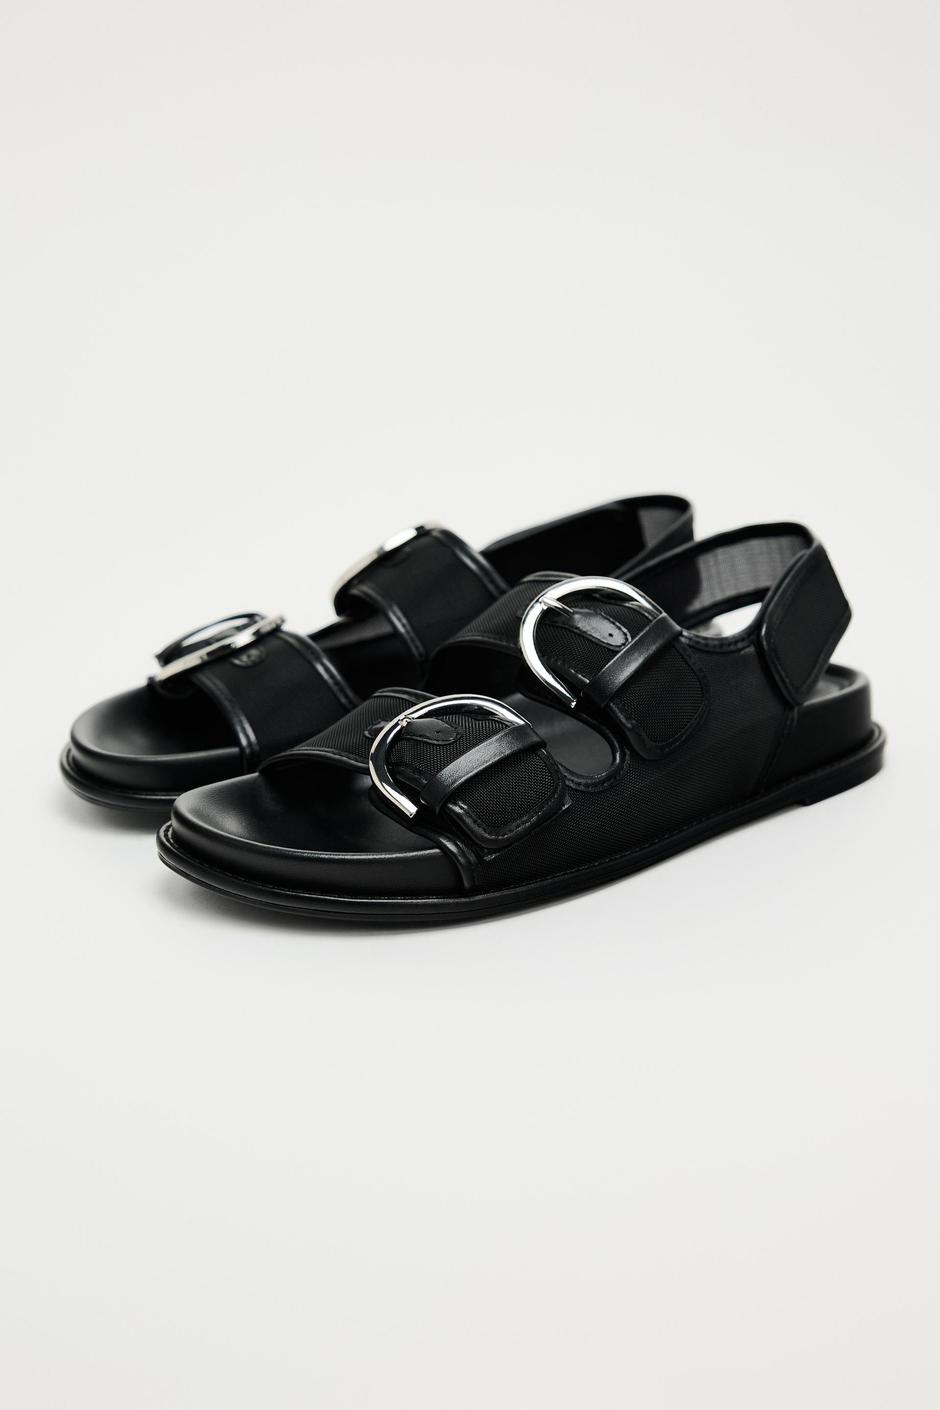 Foto: Zara, sandale za očeve (22,99 eura) | Autor: 